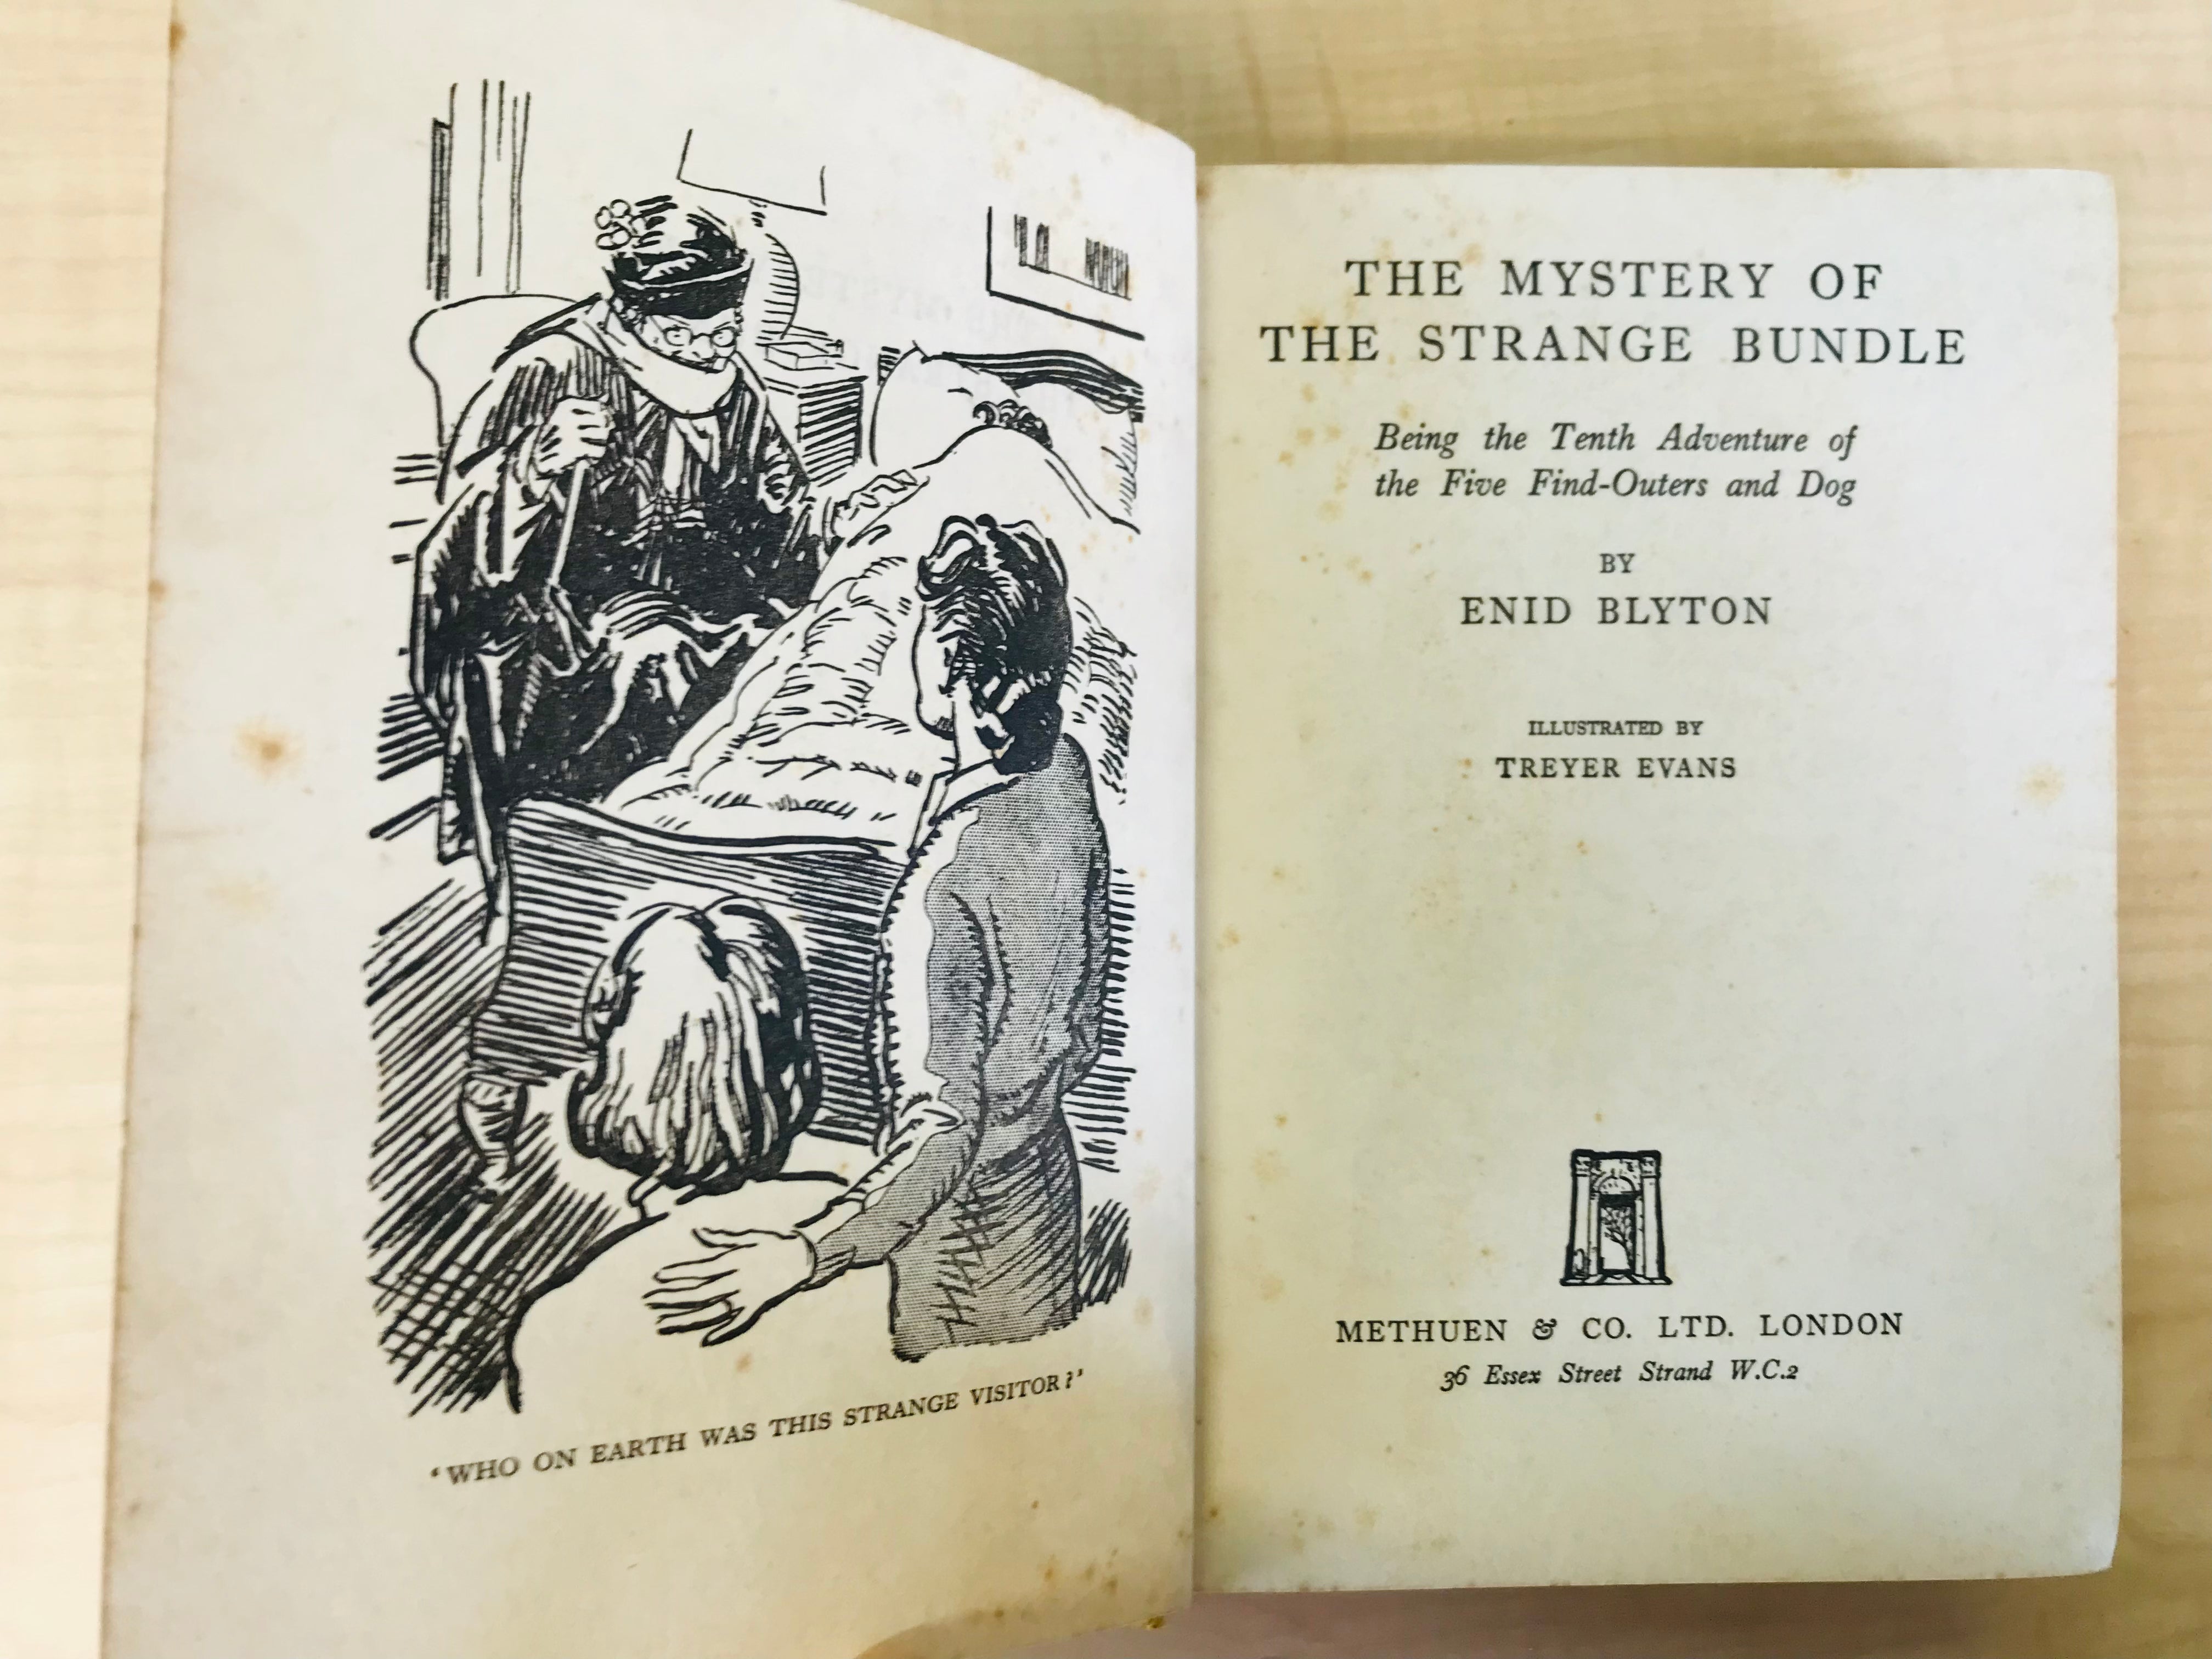 The Mystery of the Strange Bundle by Enid Blyton